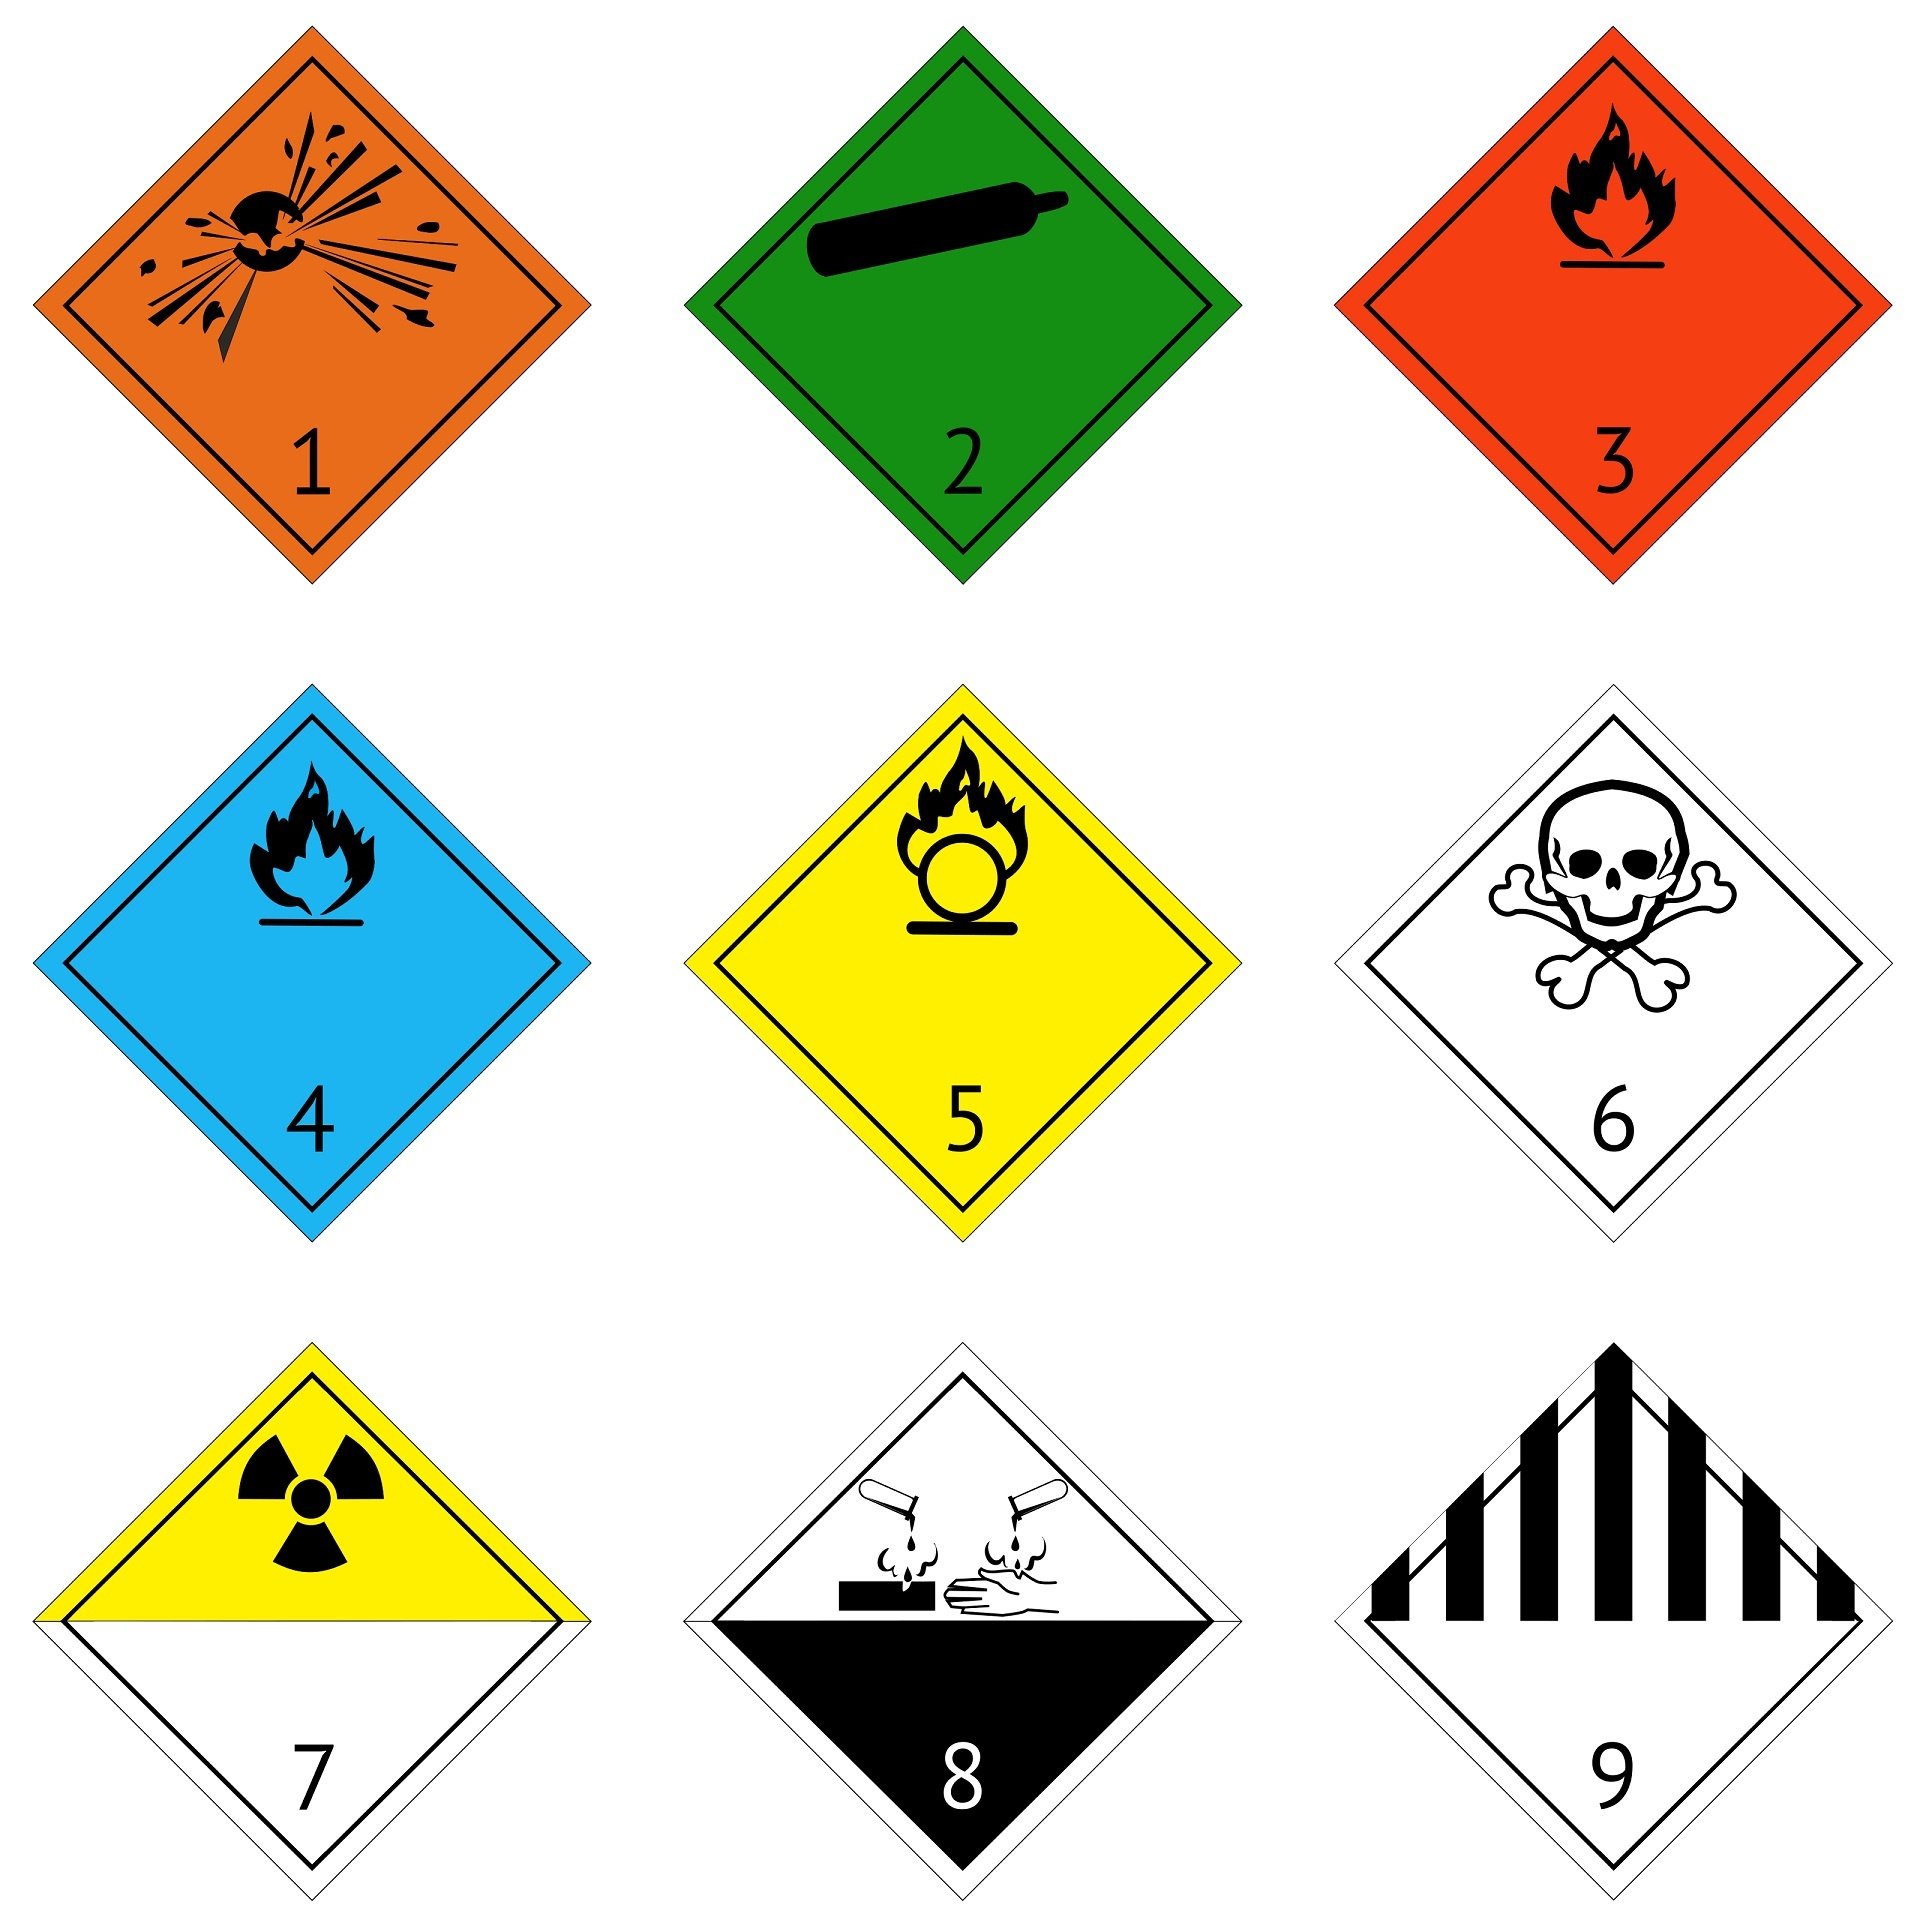 The 9 Classes Of Dangerous Goods